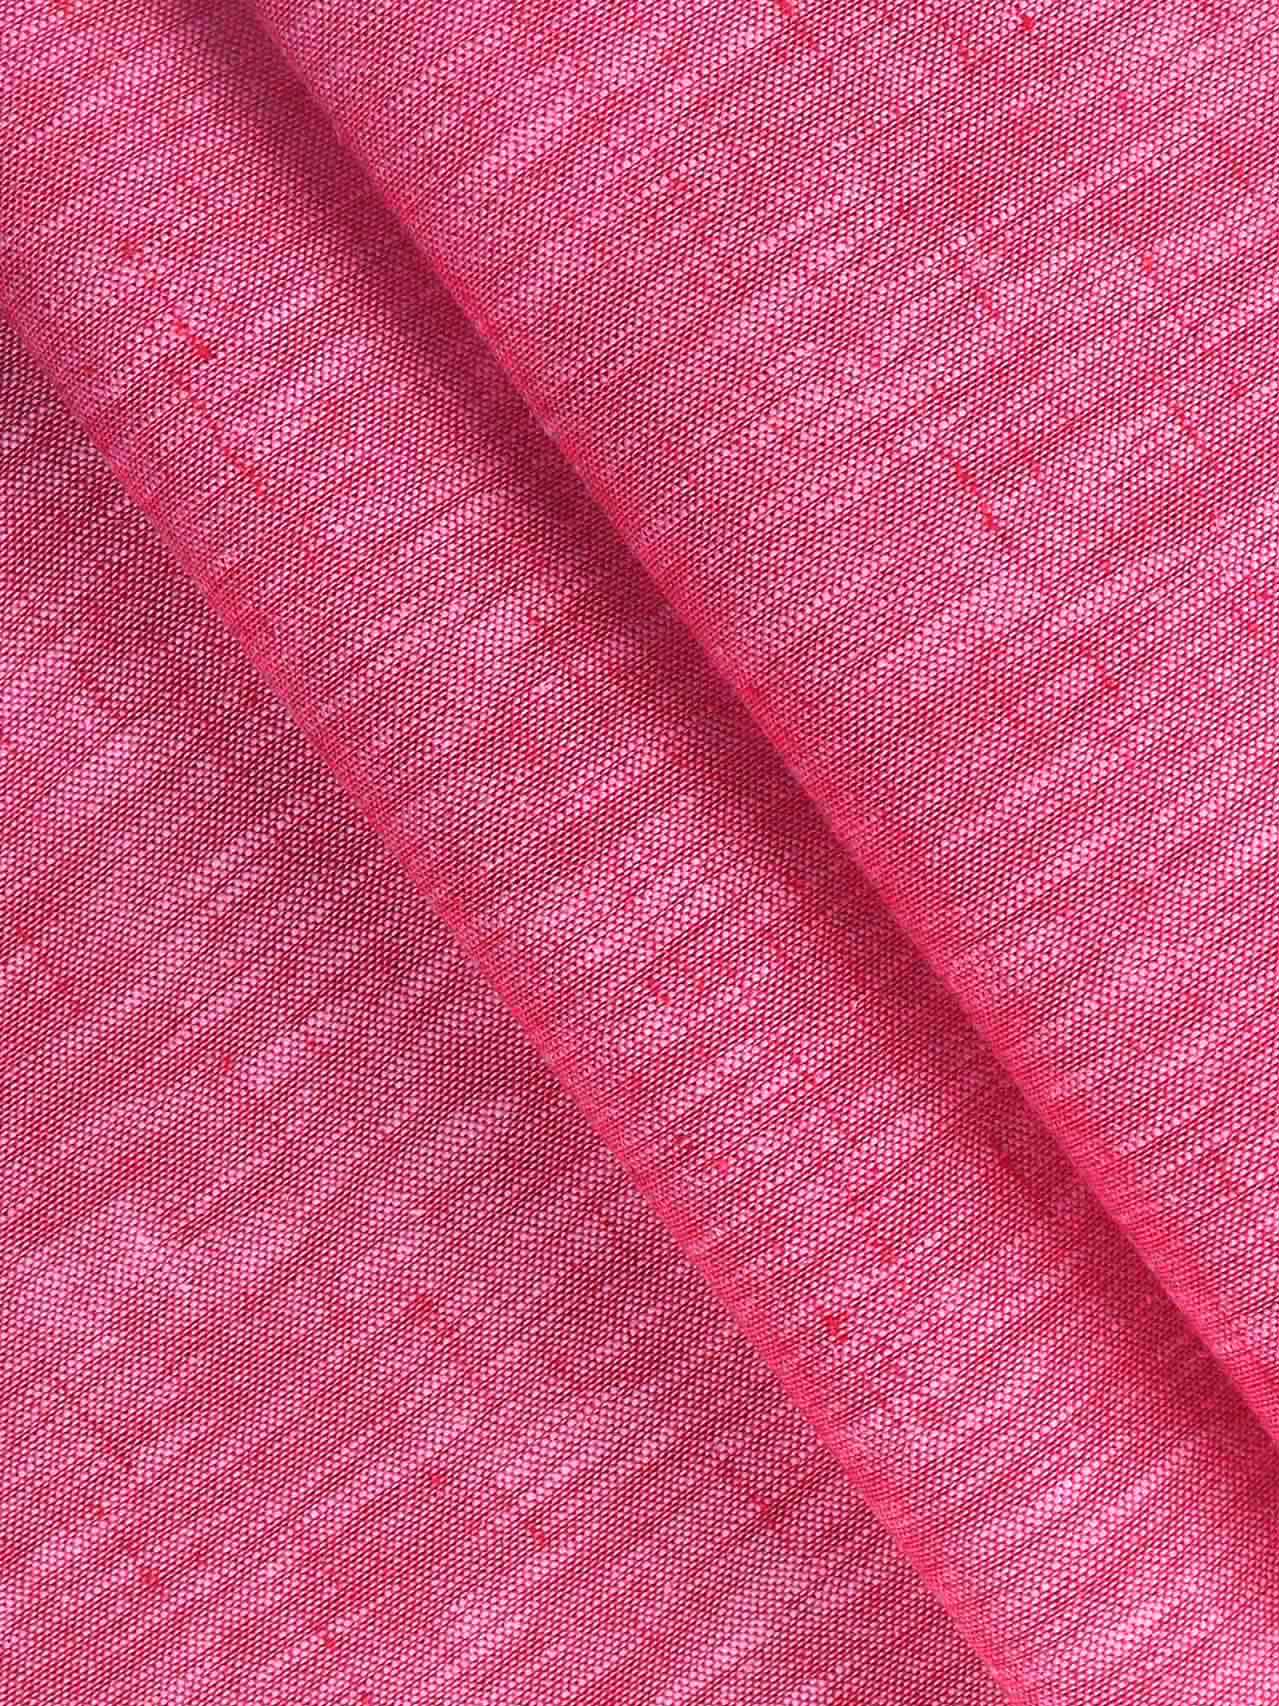 Cotton Blend Pink Colour Plain Shirt Fabric Infinity-Close view